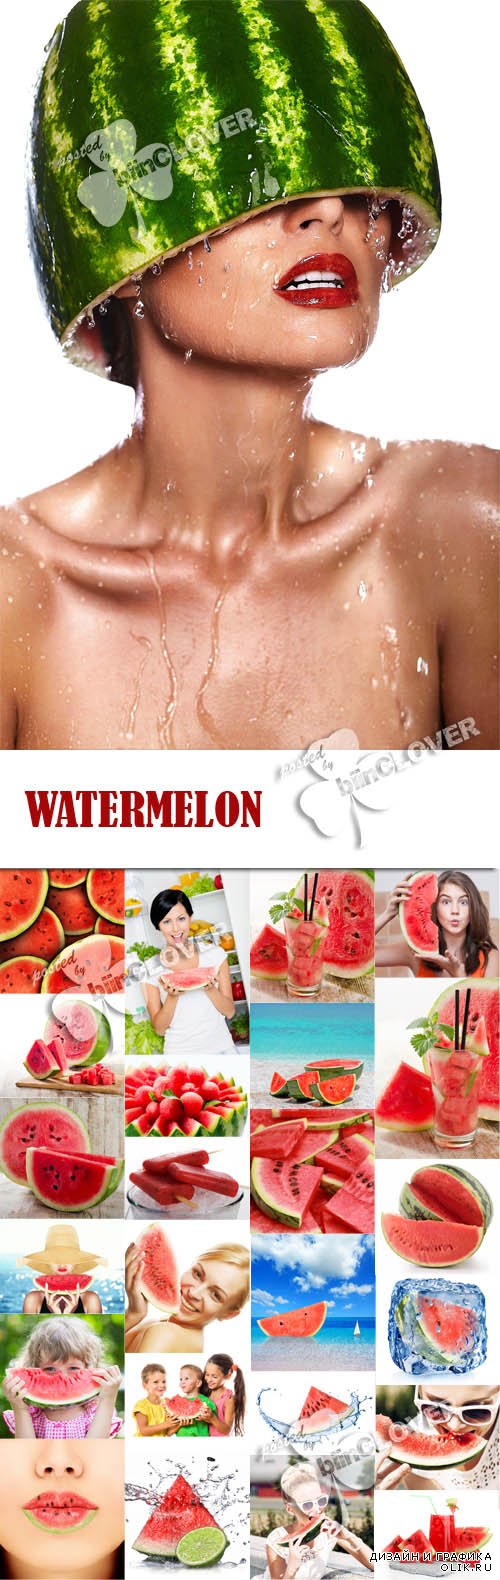 Watermelon 0589